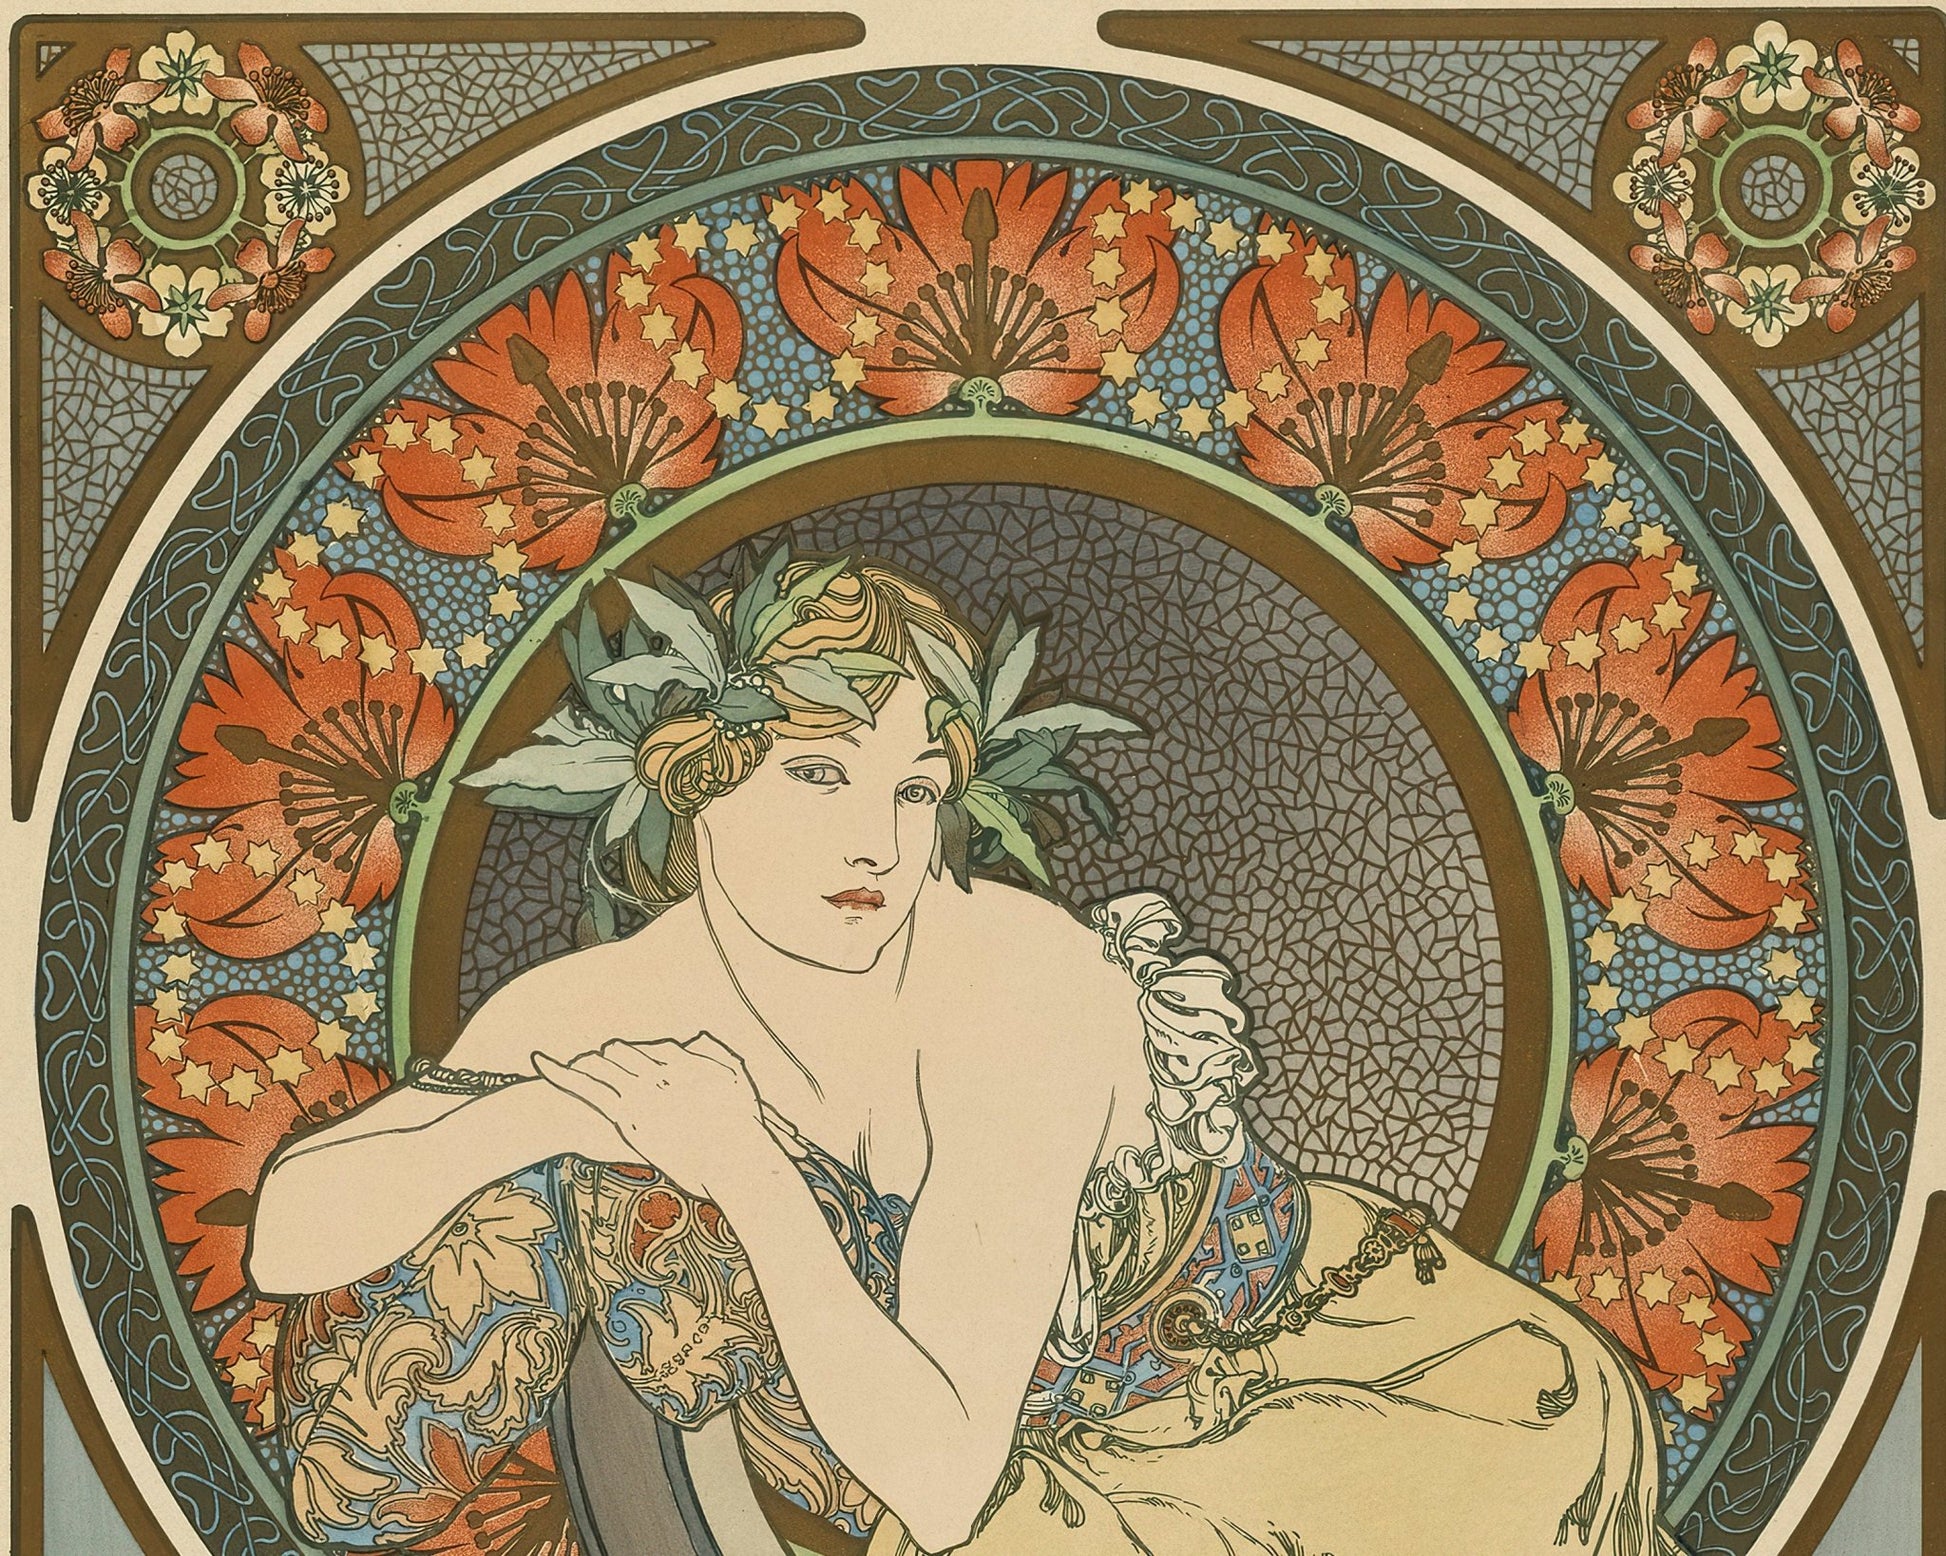 Alphonse Mucha "Exhibition Poster" (c.1899) - Mabon Gallery